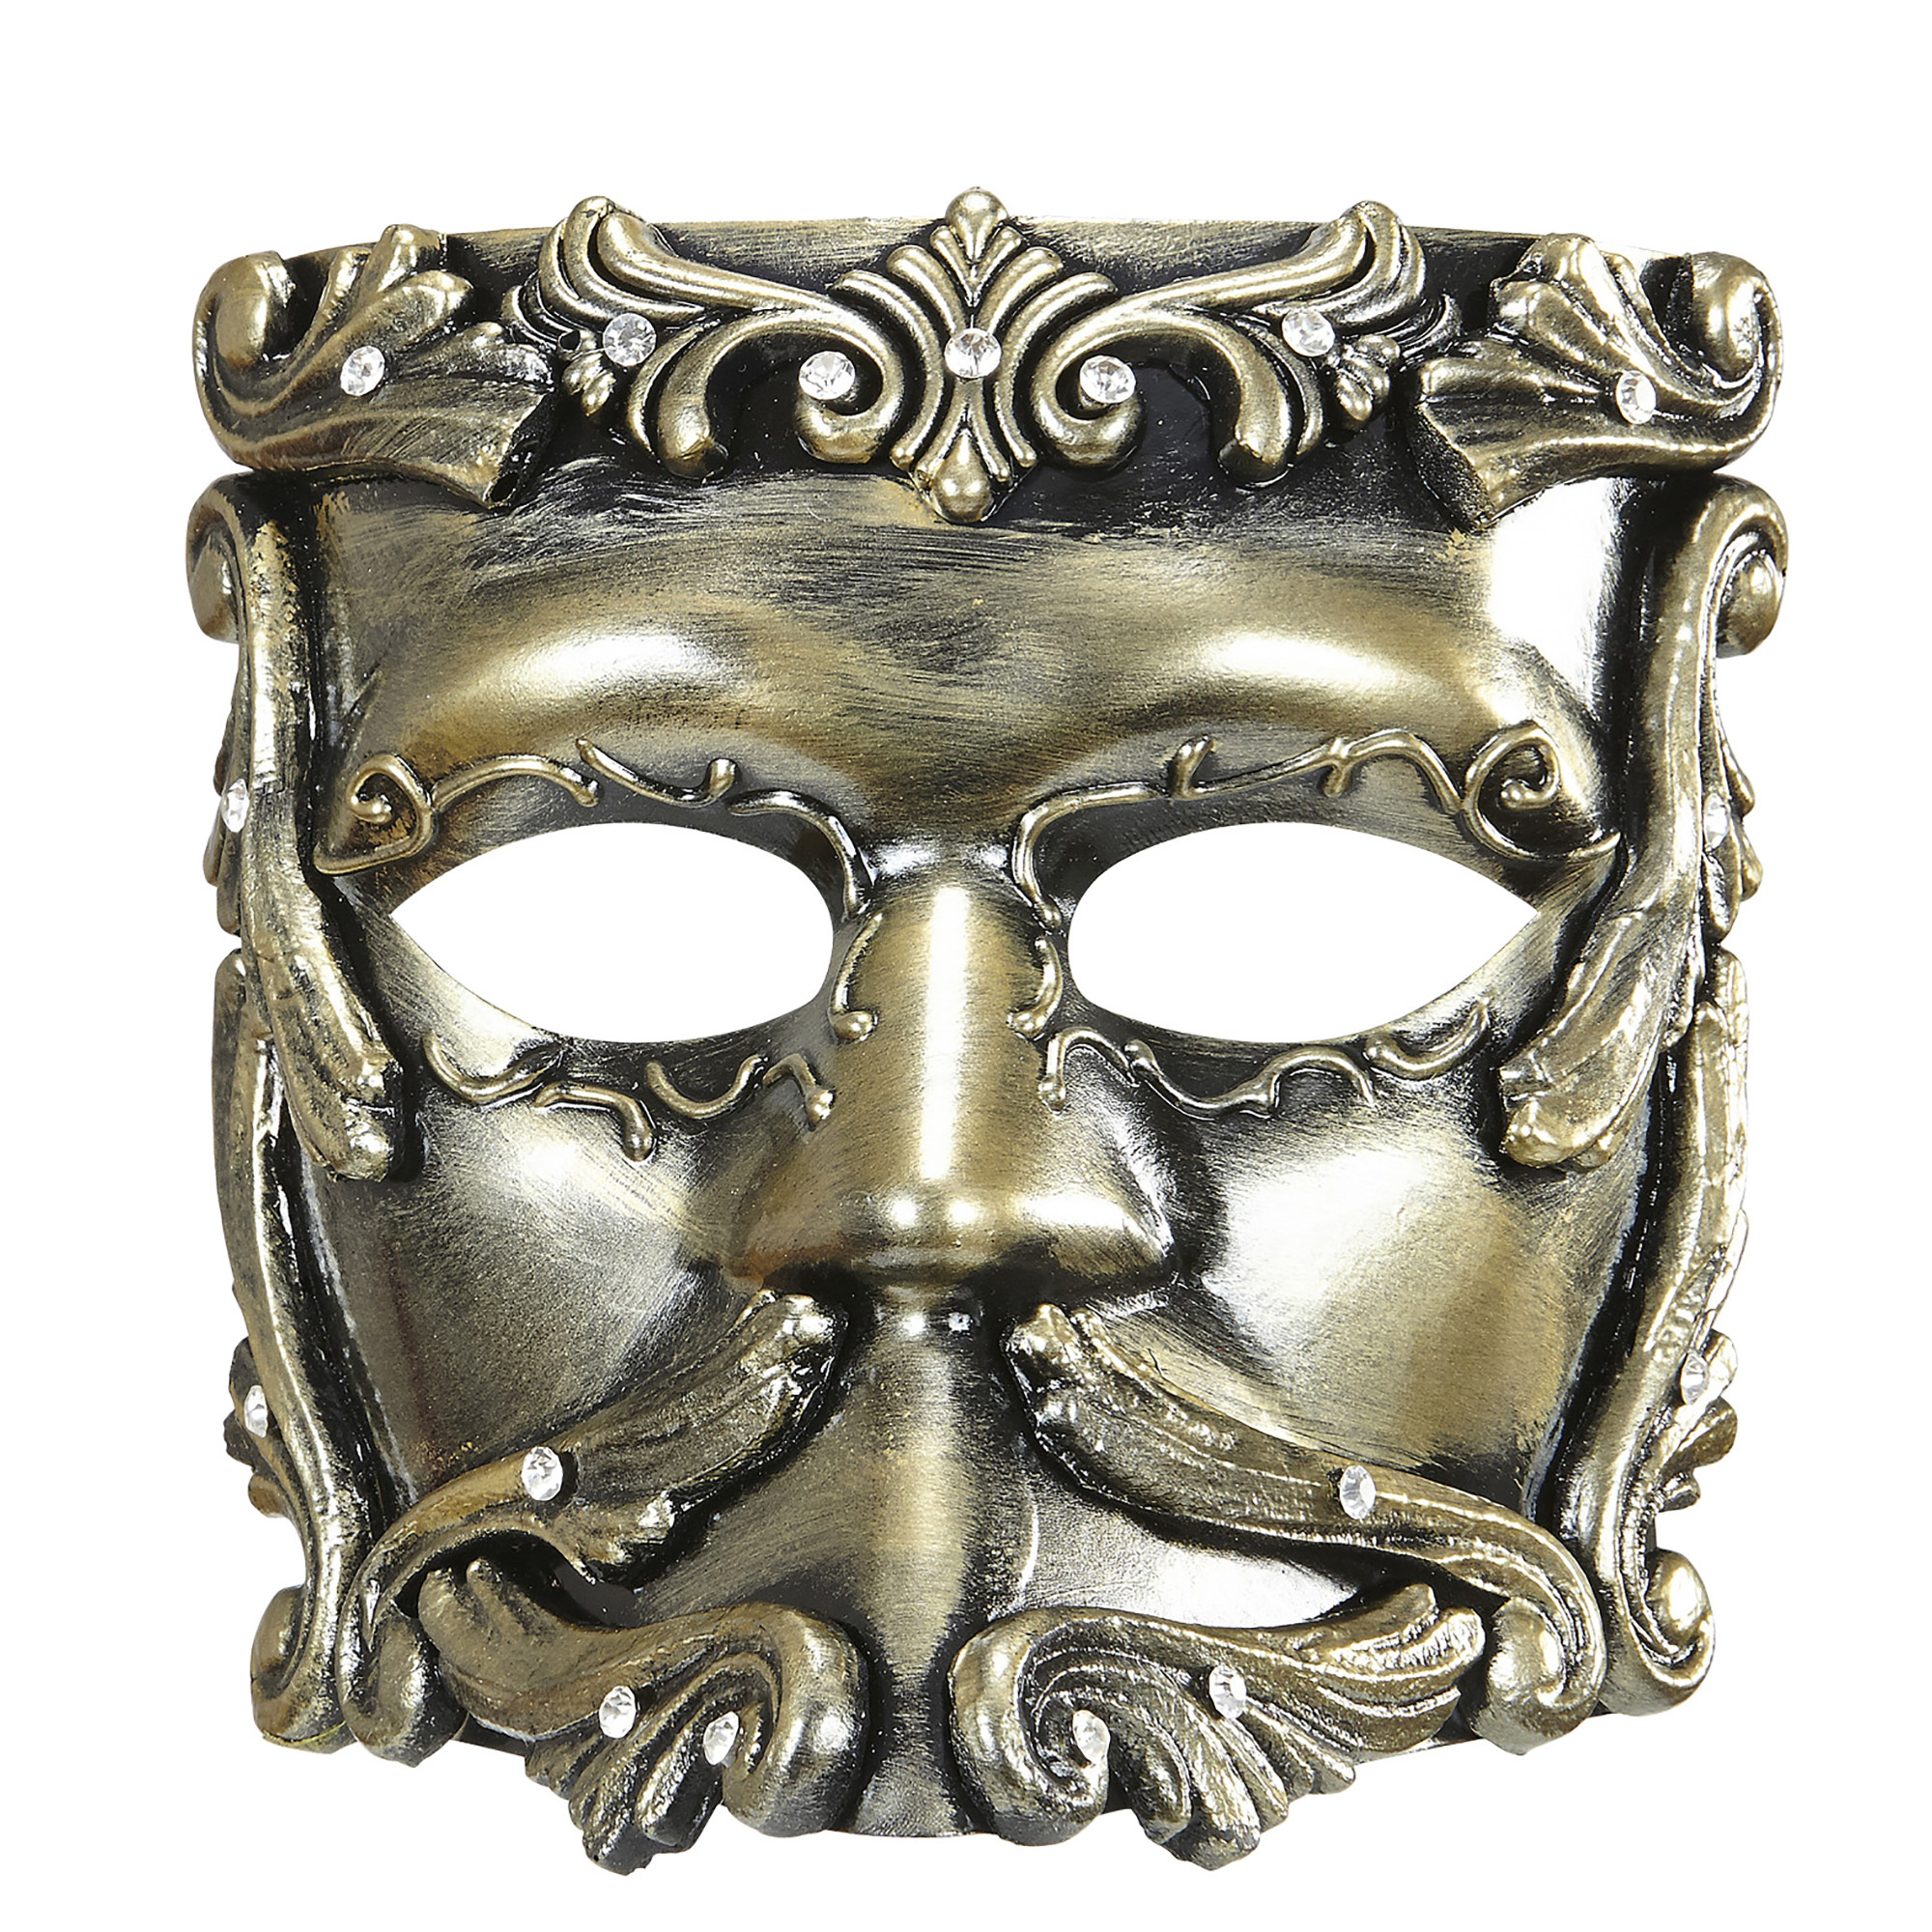 luxe barok casanova masker in brons met strass